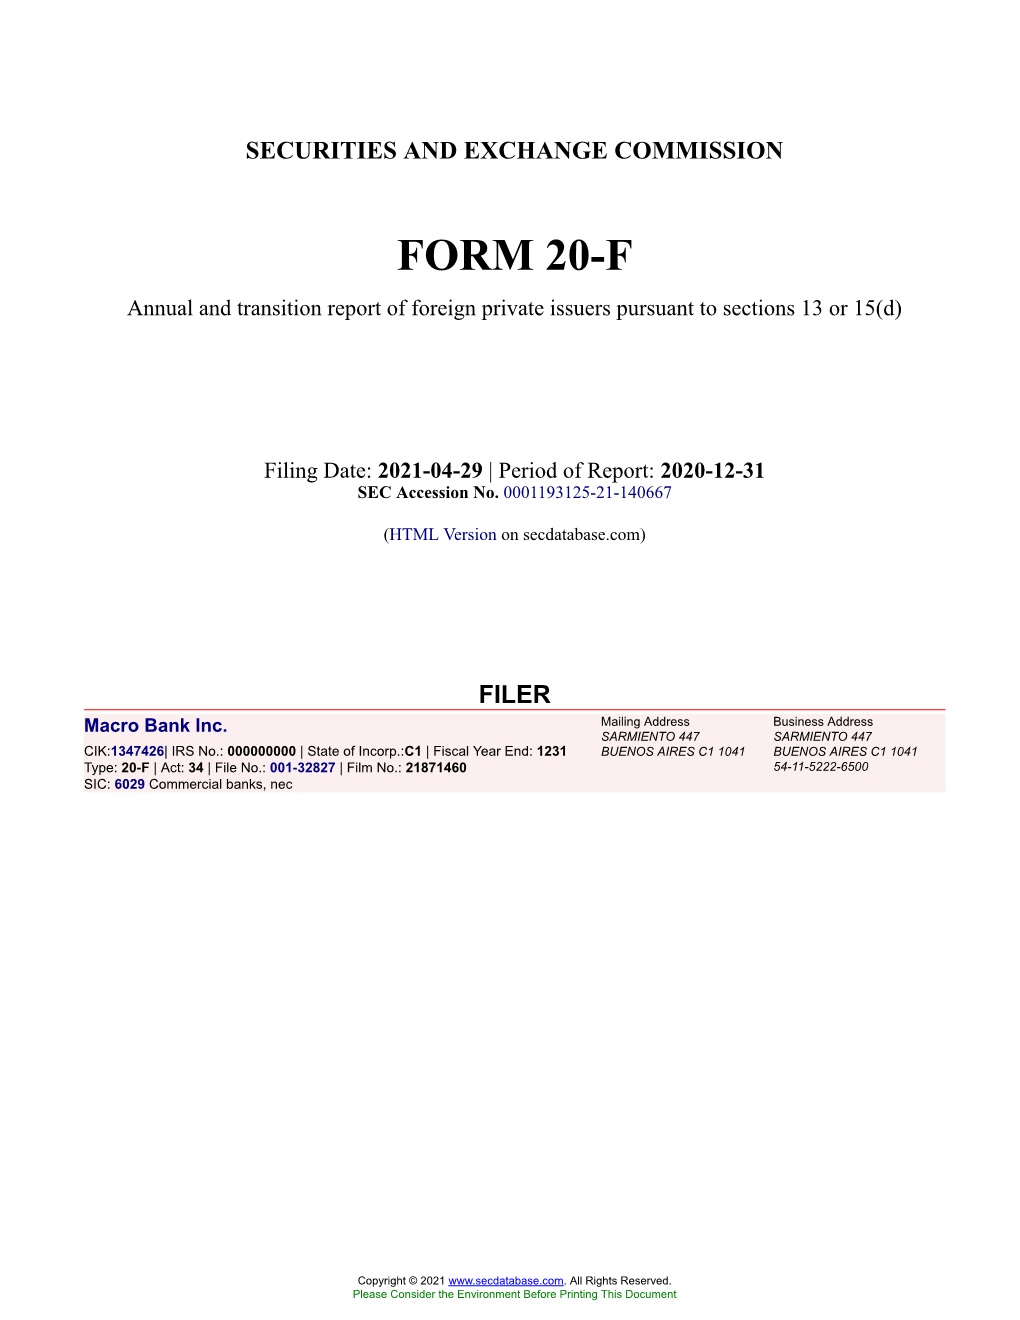 Macro Bank Inc. Form 20-F Filed 2021-04-29